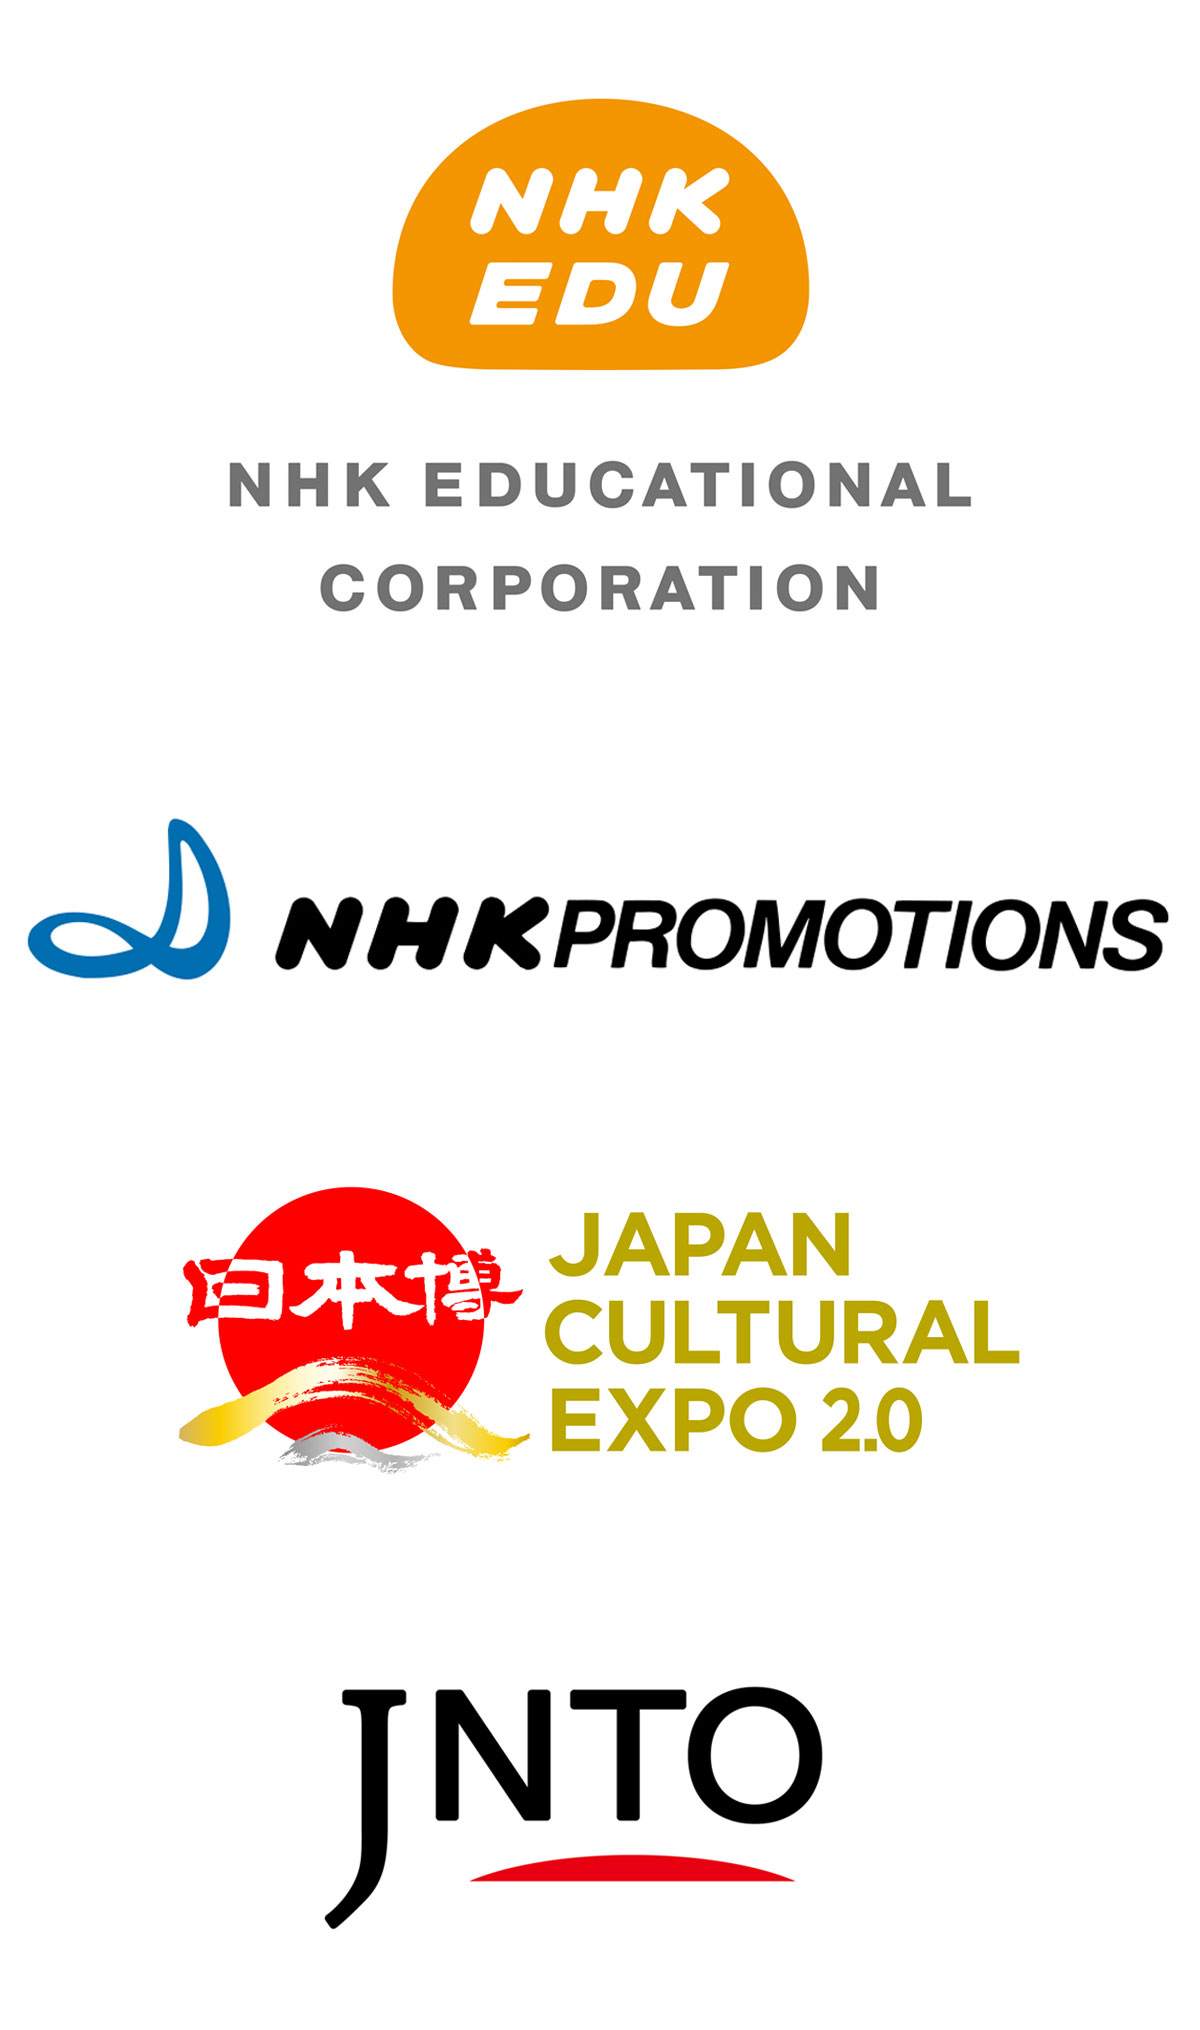 NHK Educational, NHK Promotions, Nihonhaku, JNTO logos